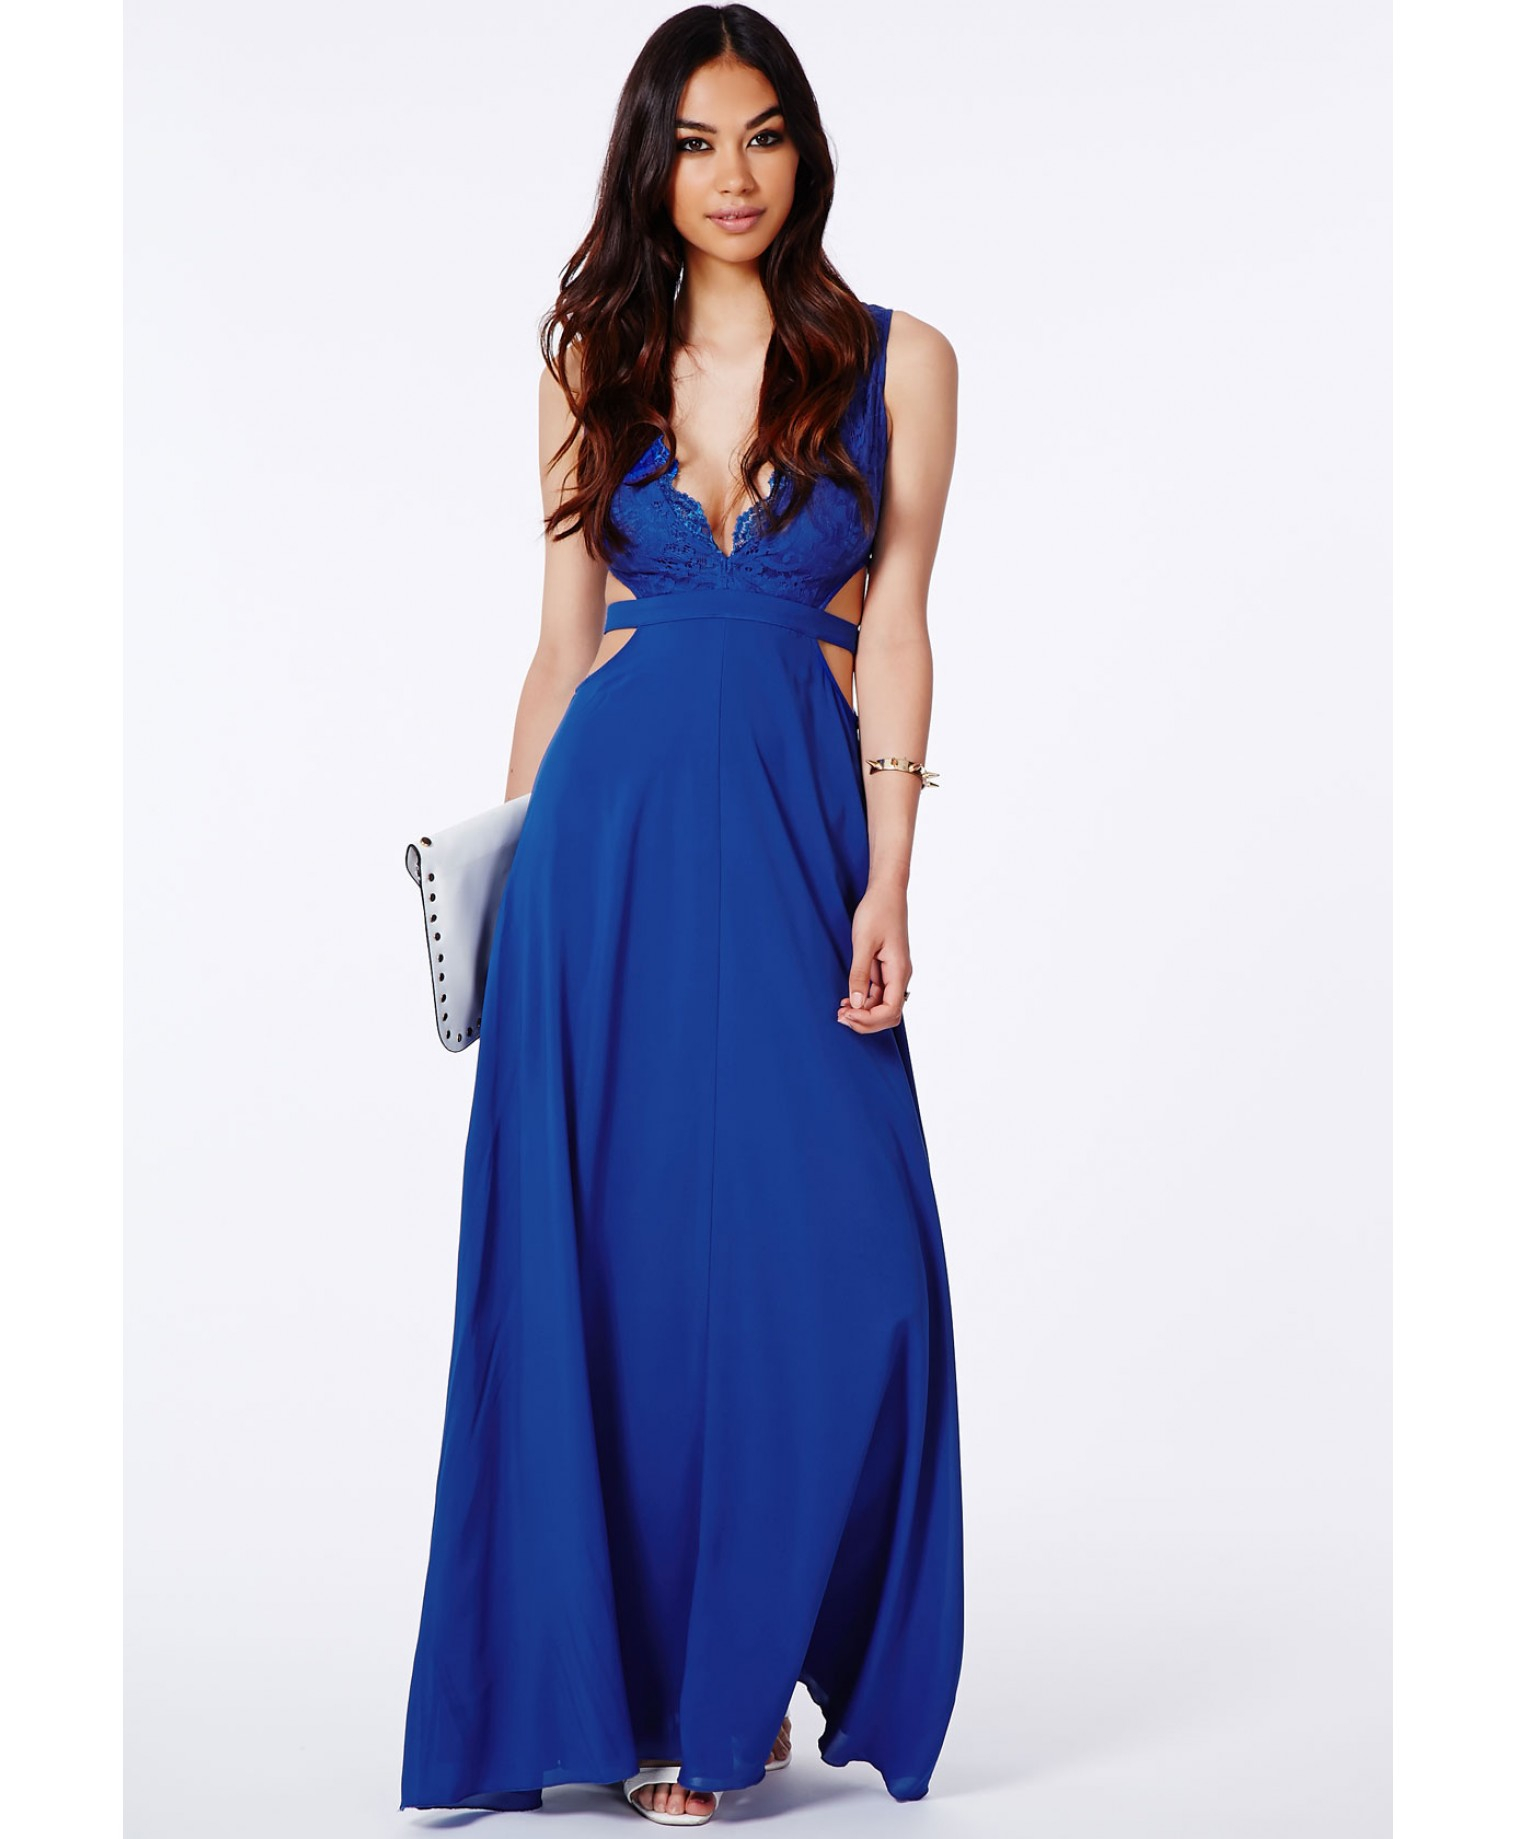 Lyst - Missguided Bakiya Cobalt Blue Lace Cut Out Maxi Dress in Blue